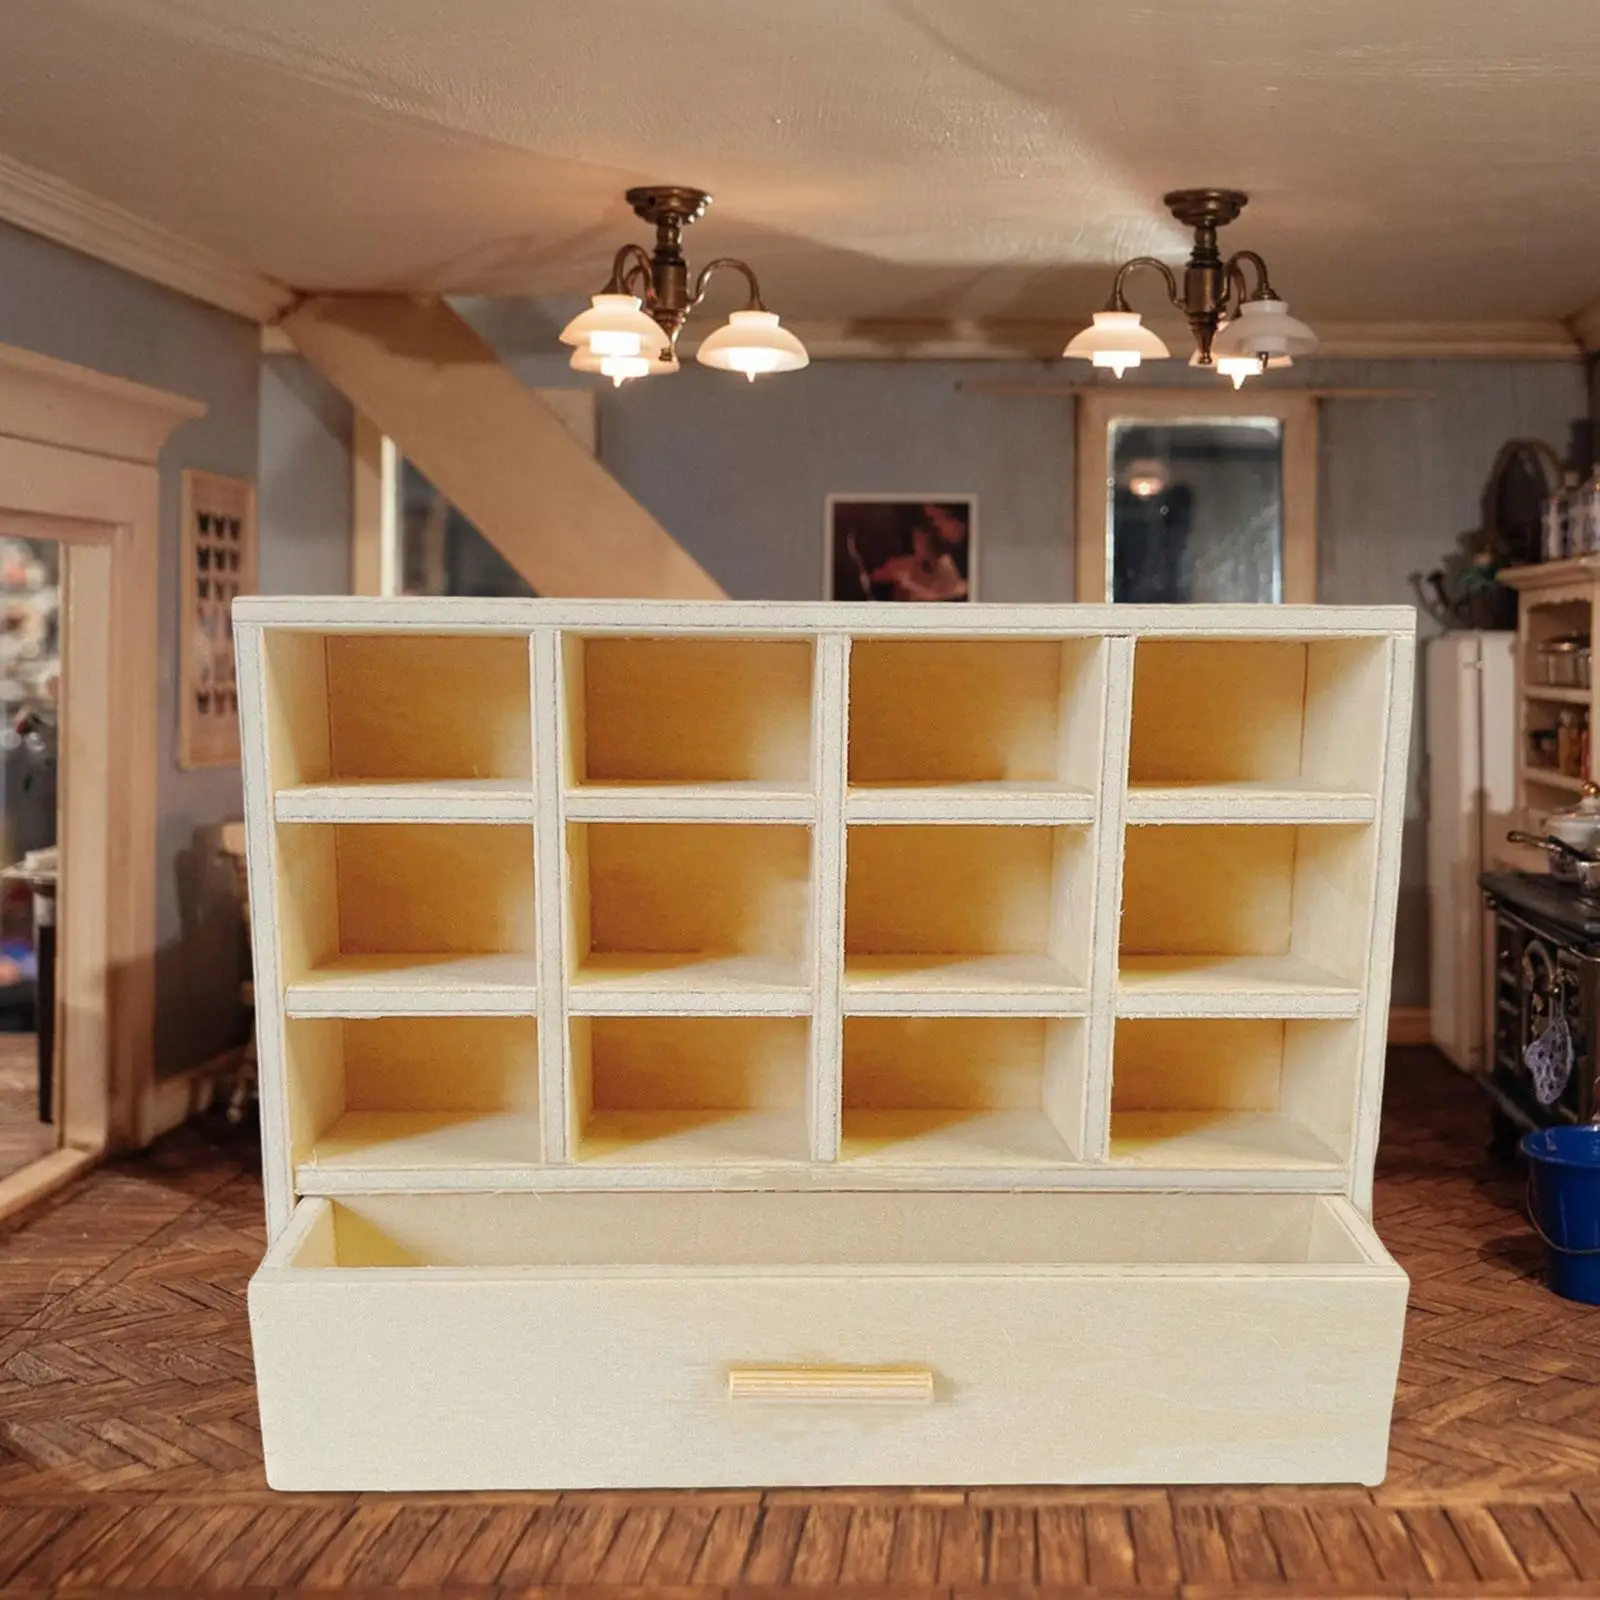 1/12 Dollhouse Miniature Model Bookshelf Scenery Supplies Accessories Home Furniture Toys Bedroom Living Room Decor